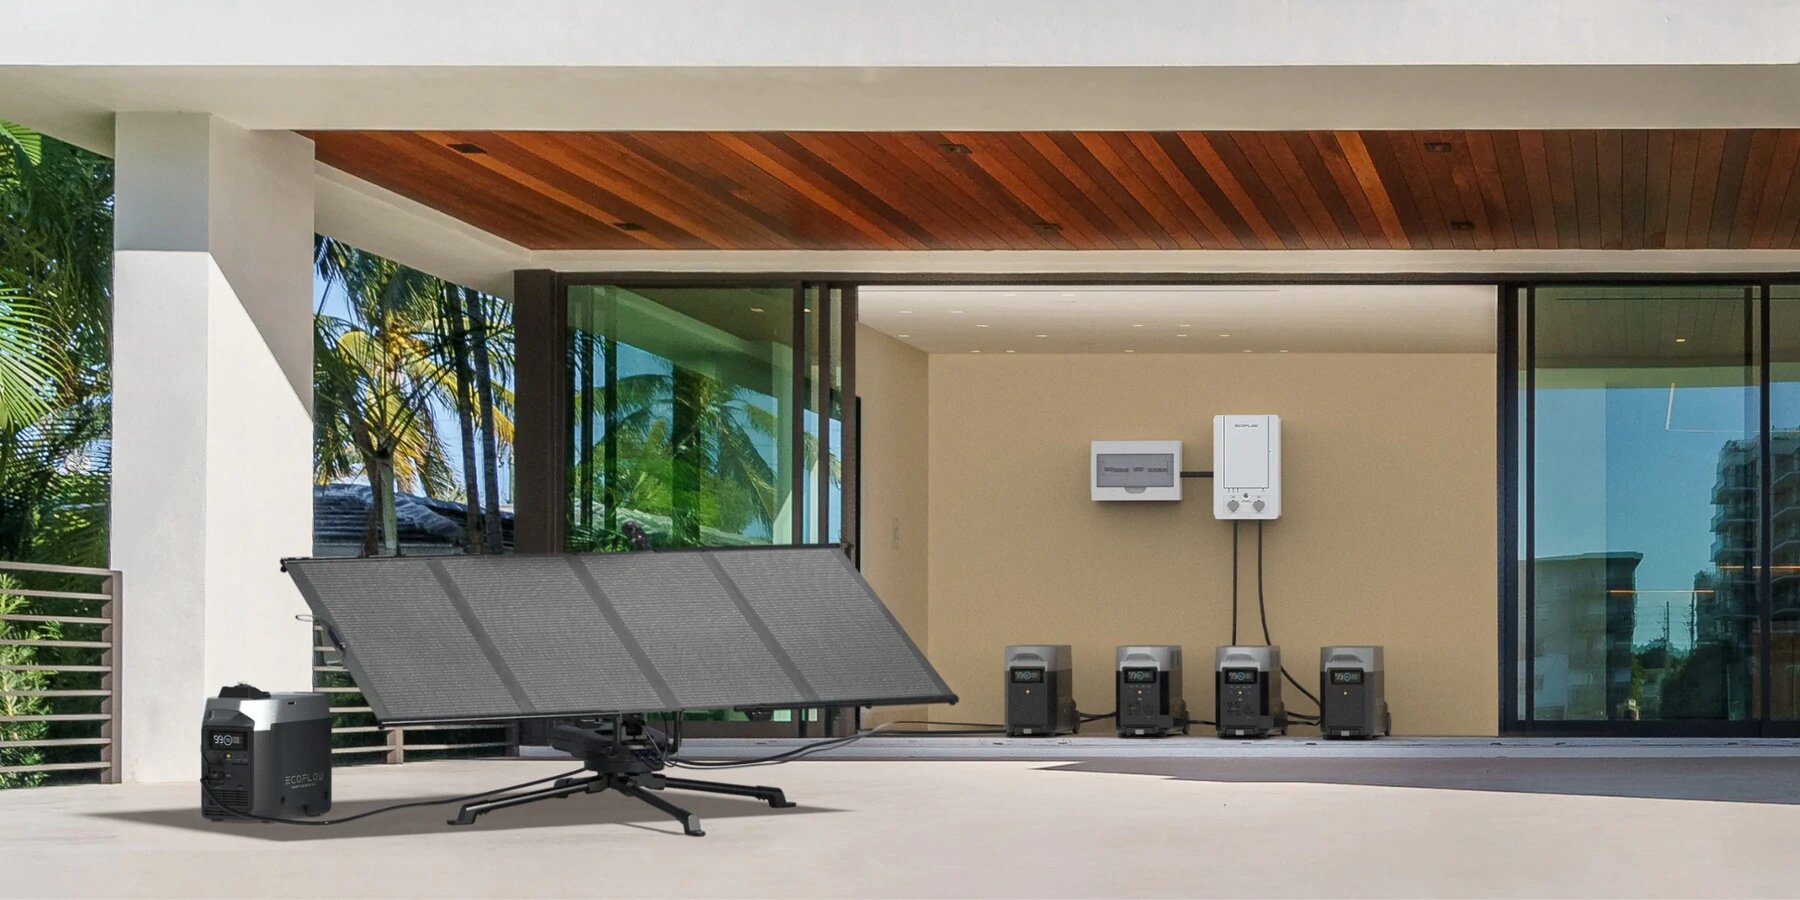 Energiestation 220V delta pro Solarpanel ecoflow Smart Home Panel ecoflow Smart Generator ecoflow